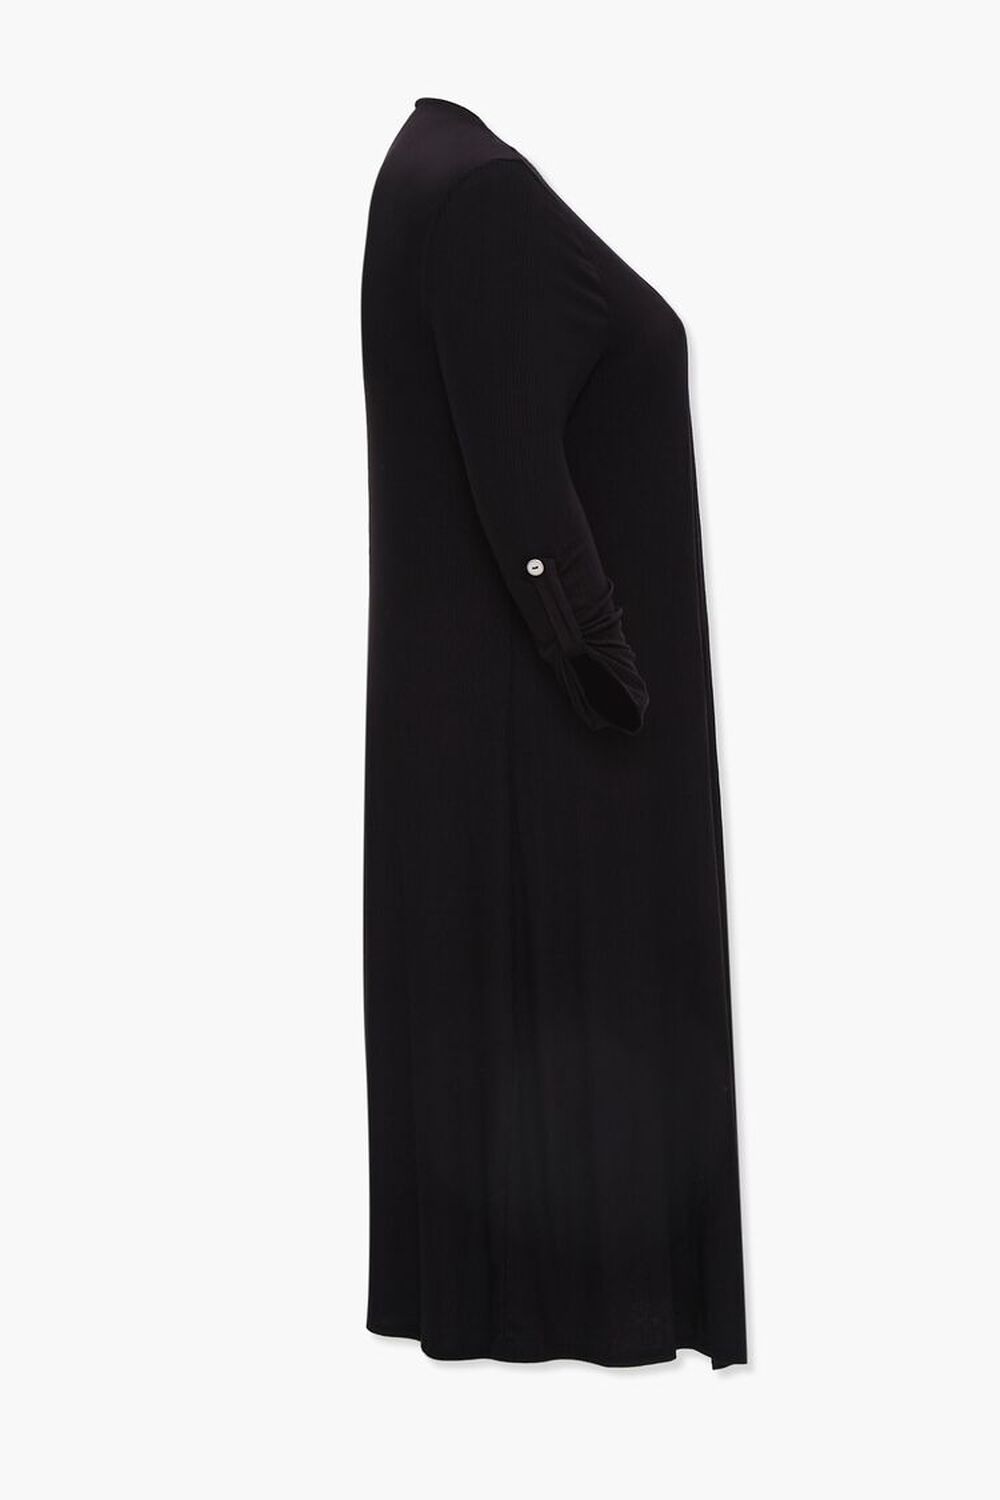 BLACK Plus Size Ribbed Duster Cardigan, image 2